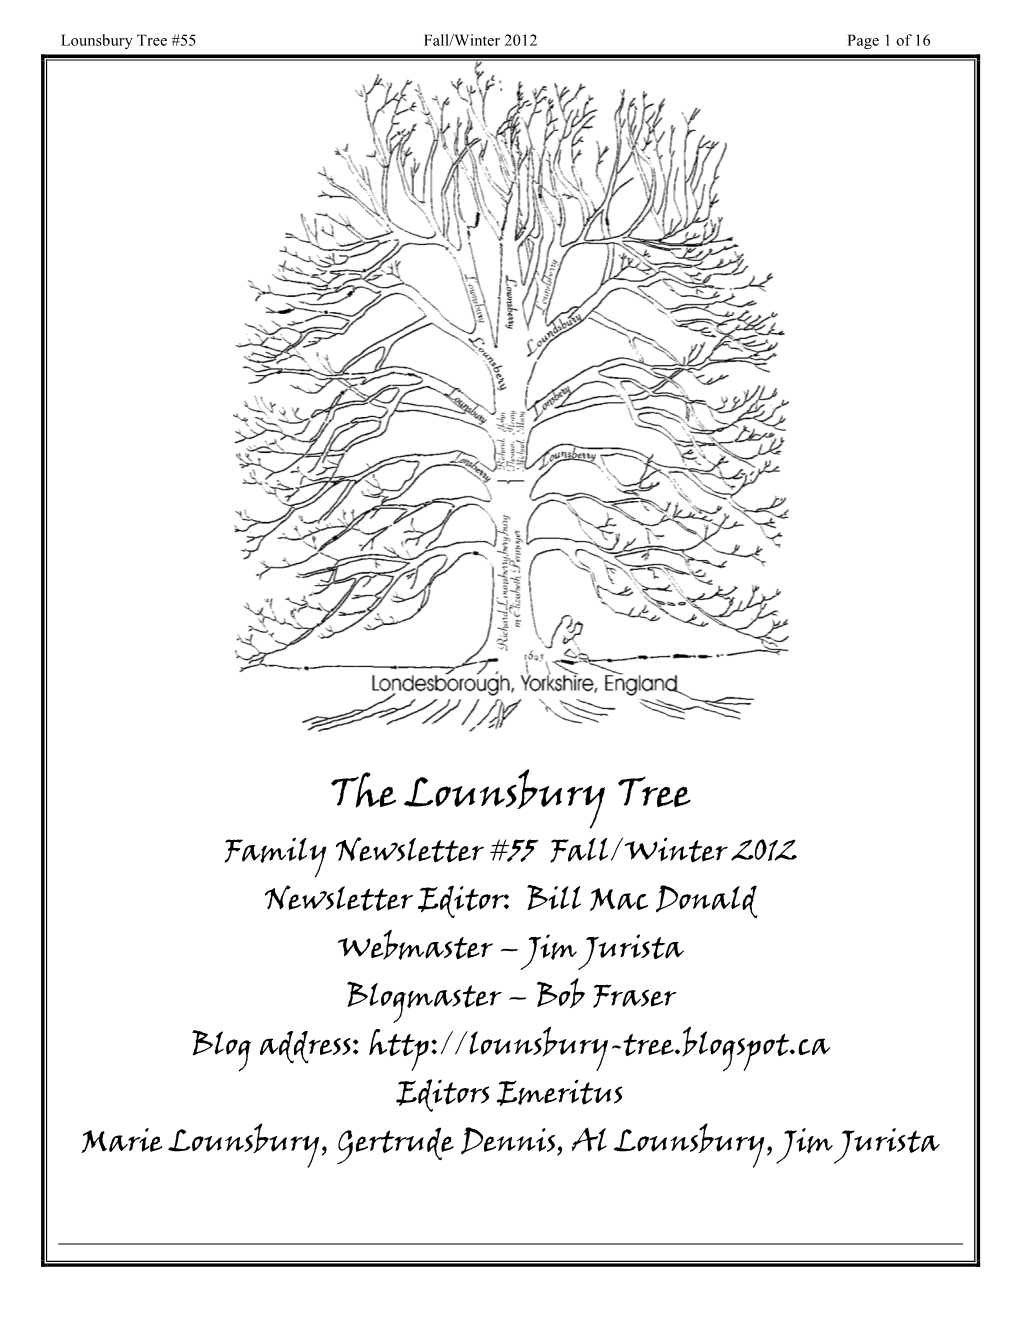 The Lounsbury Tree